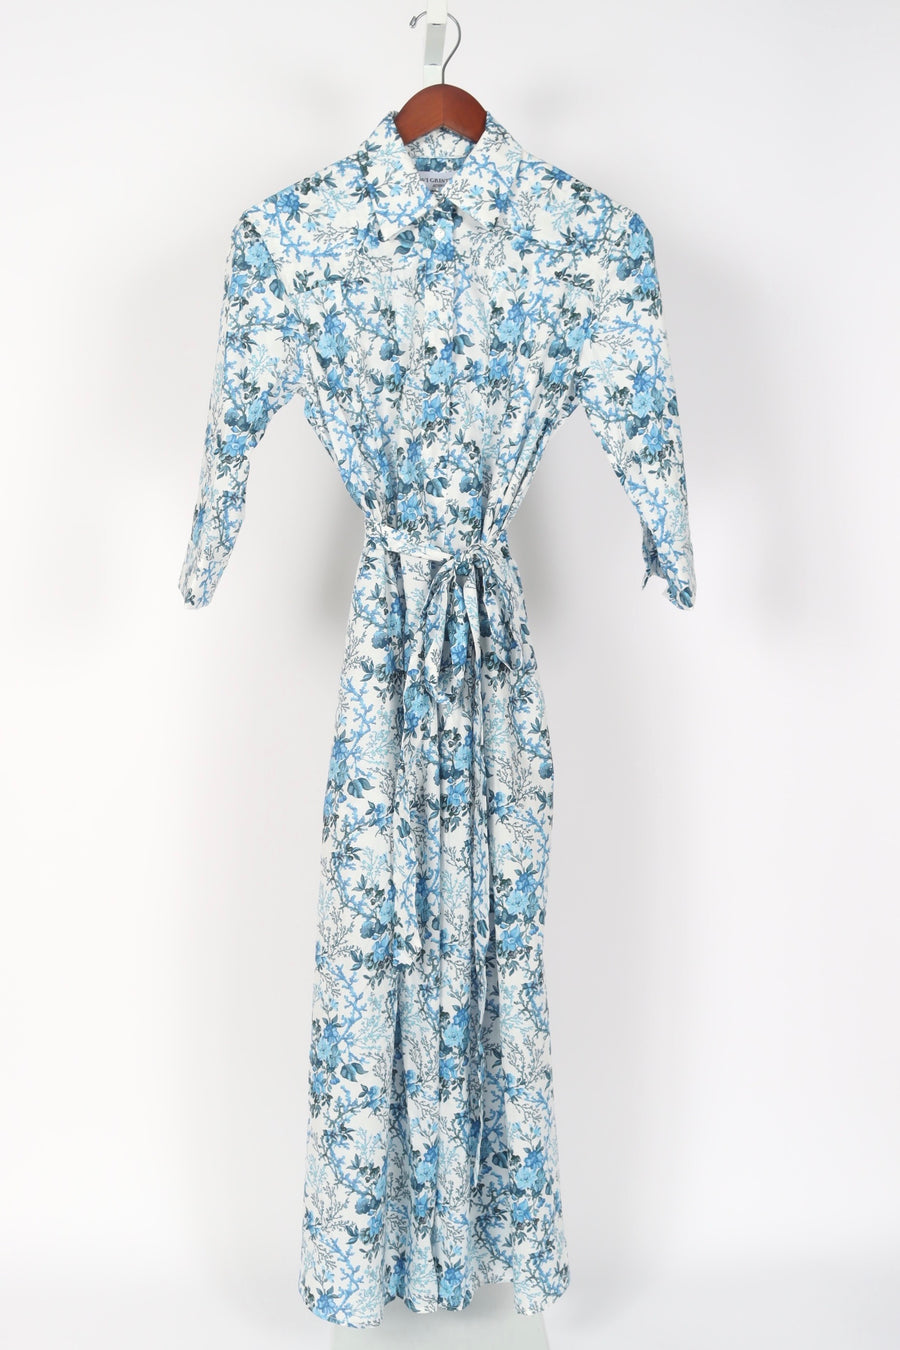 Marina MS Dress - White/Blue